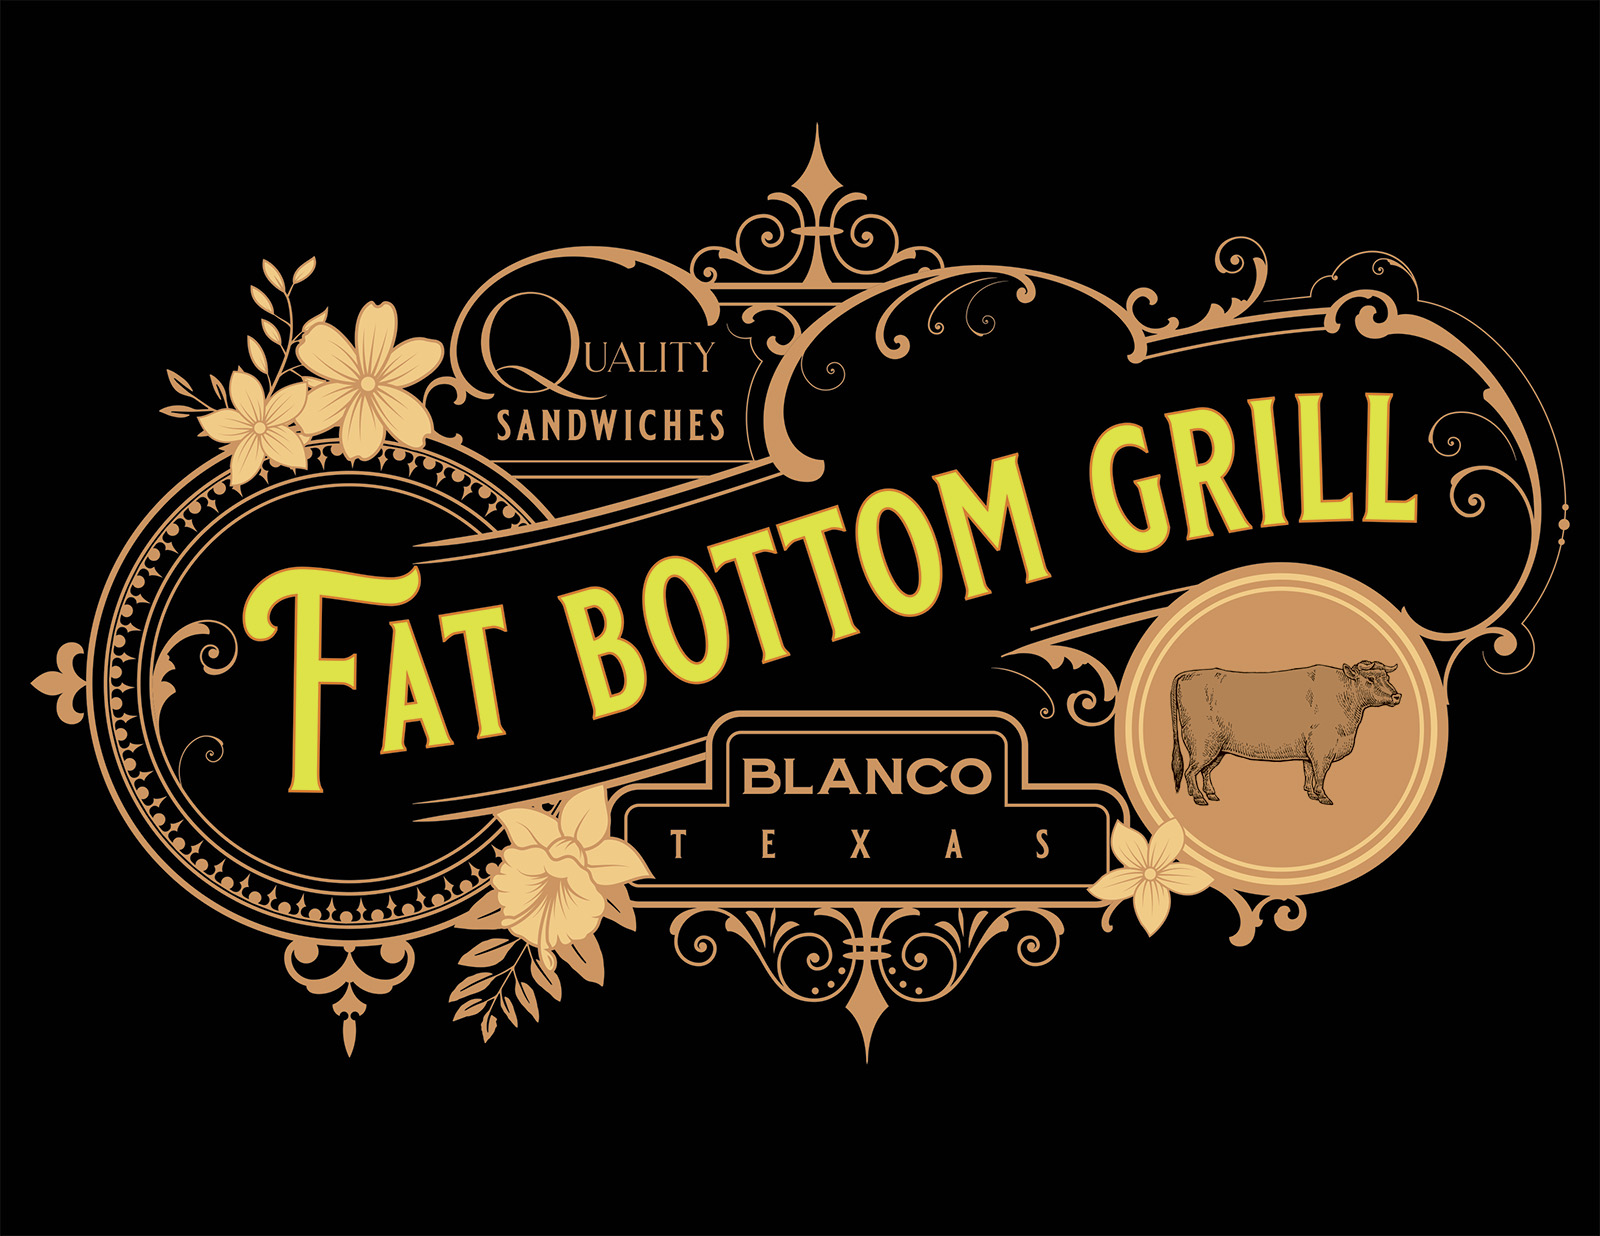 Fat Bottom Grill